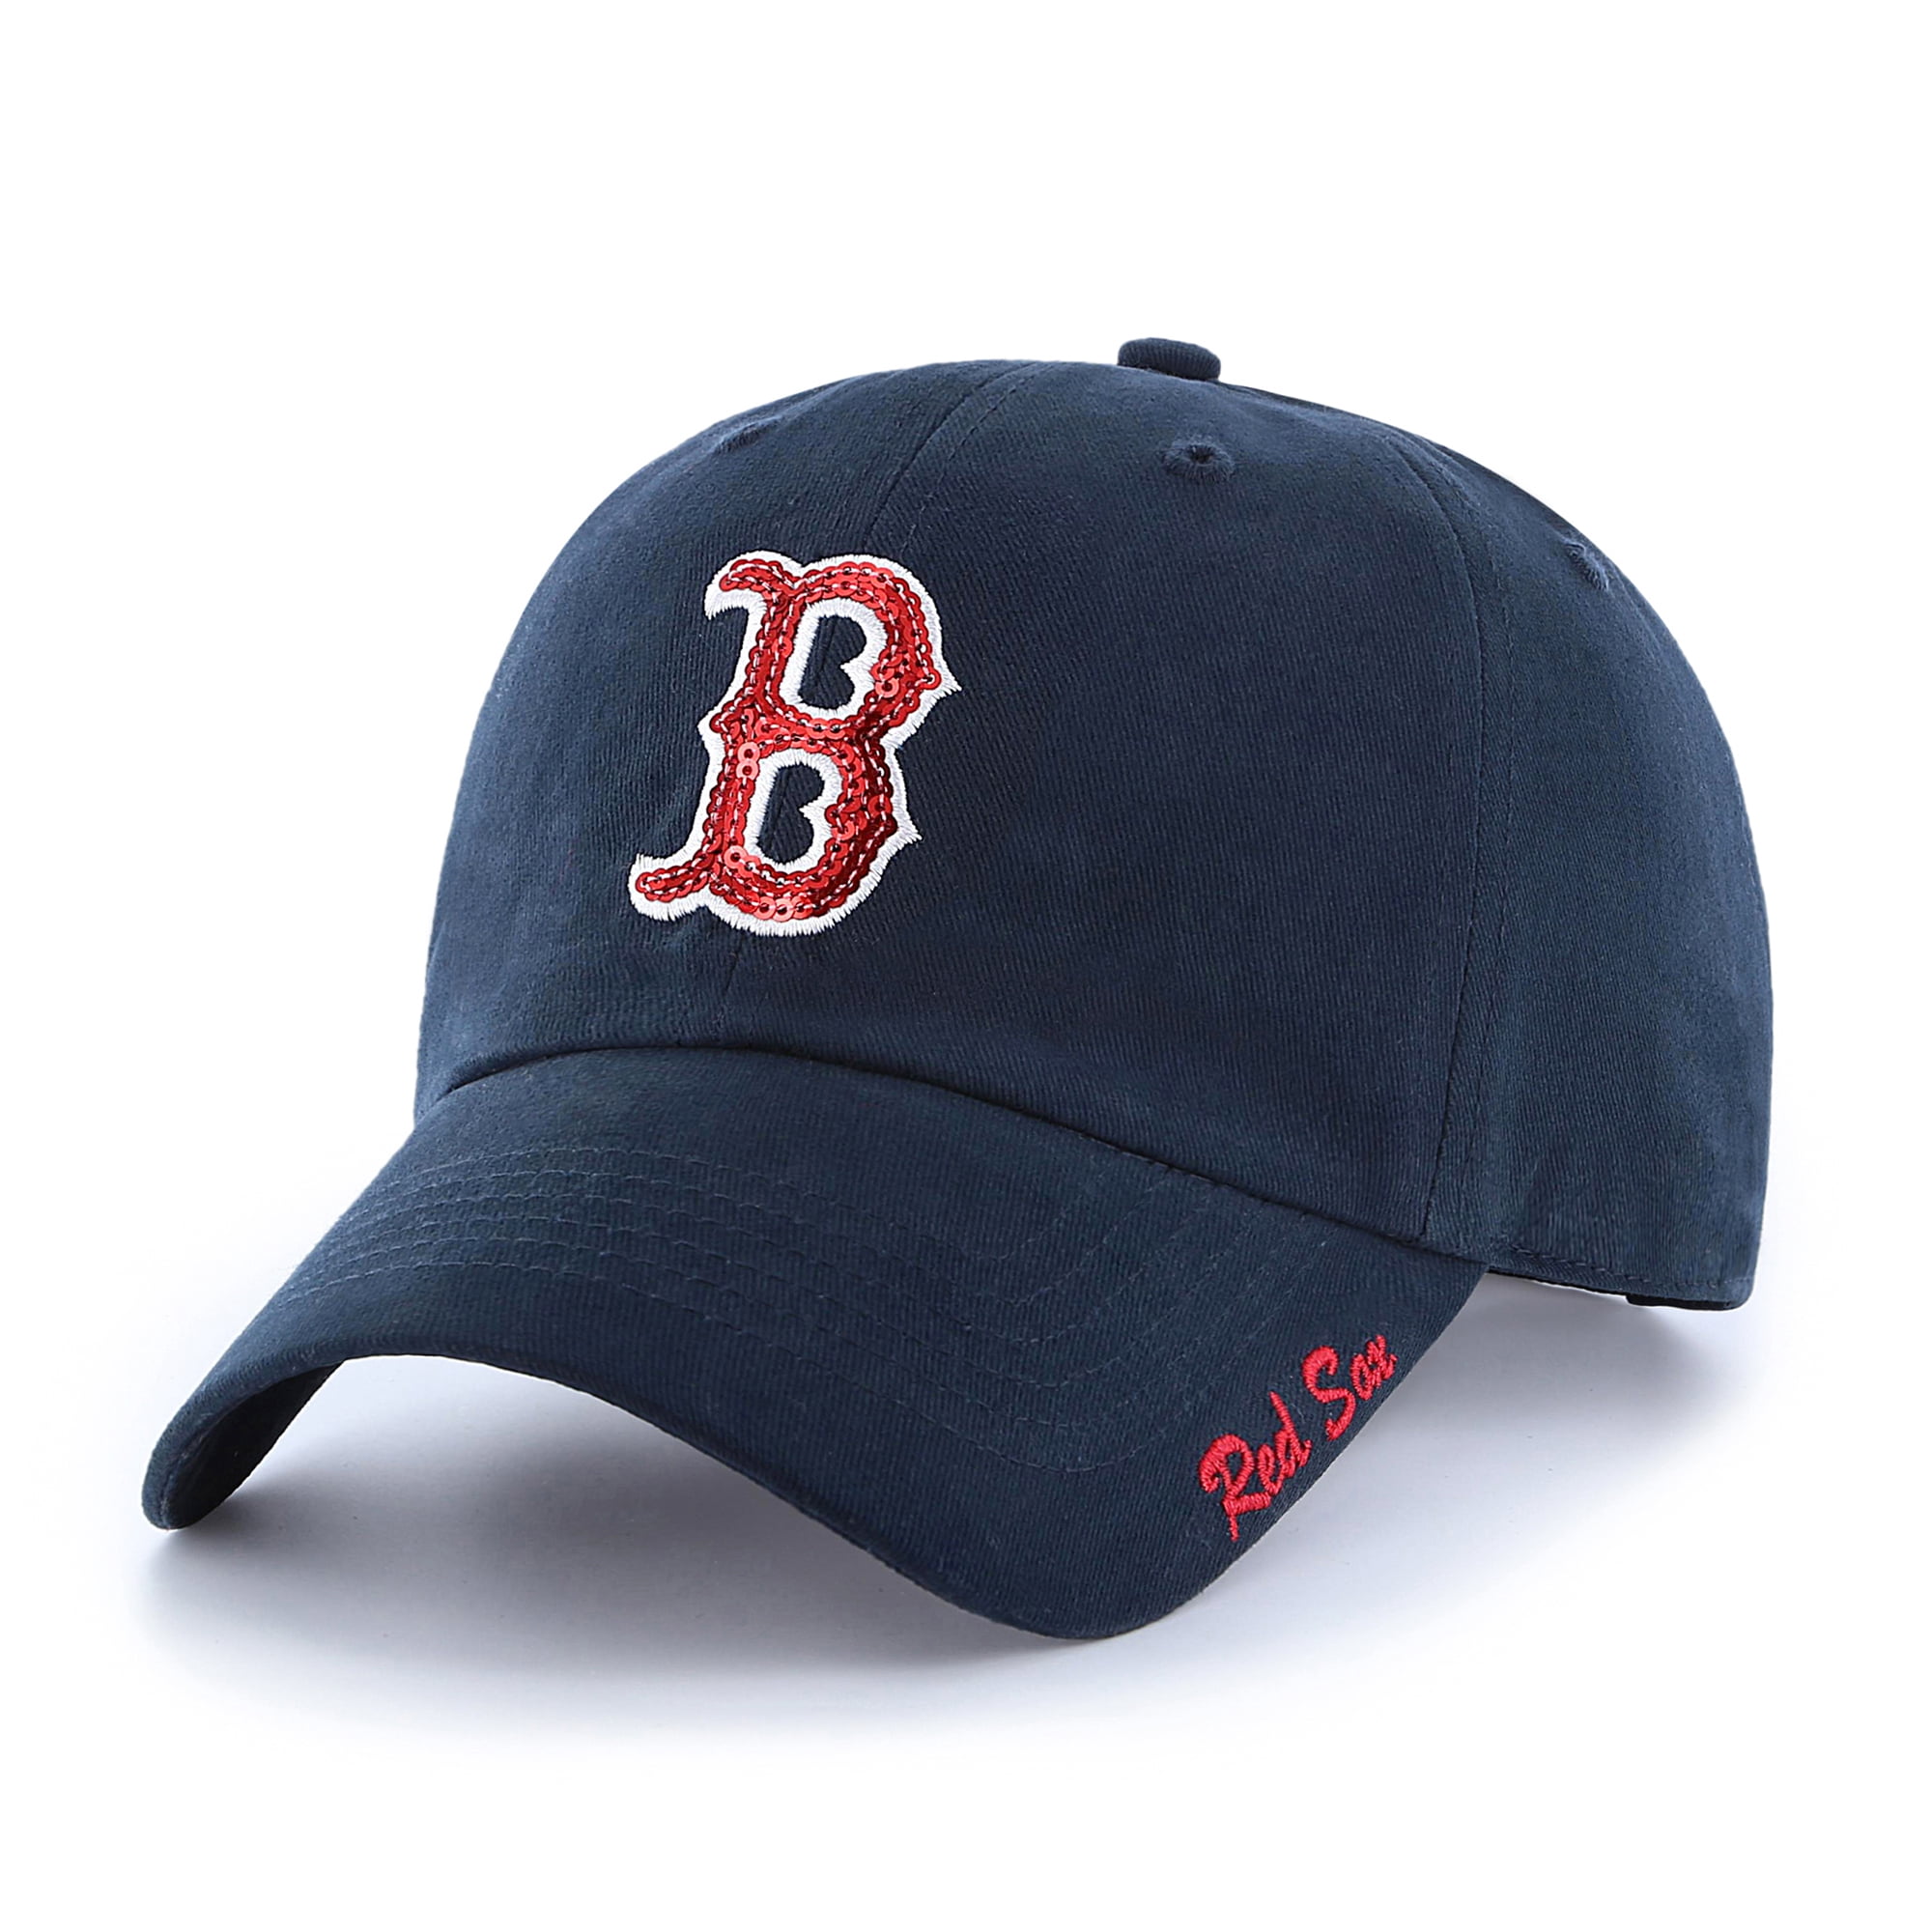 MLB Boston Red Sox Sparkle Women's Adjustable Cap/Hat by Fan Favorite 